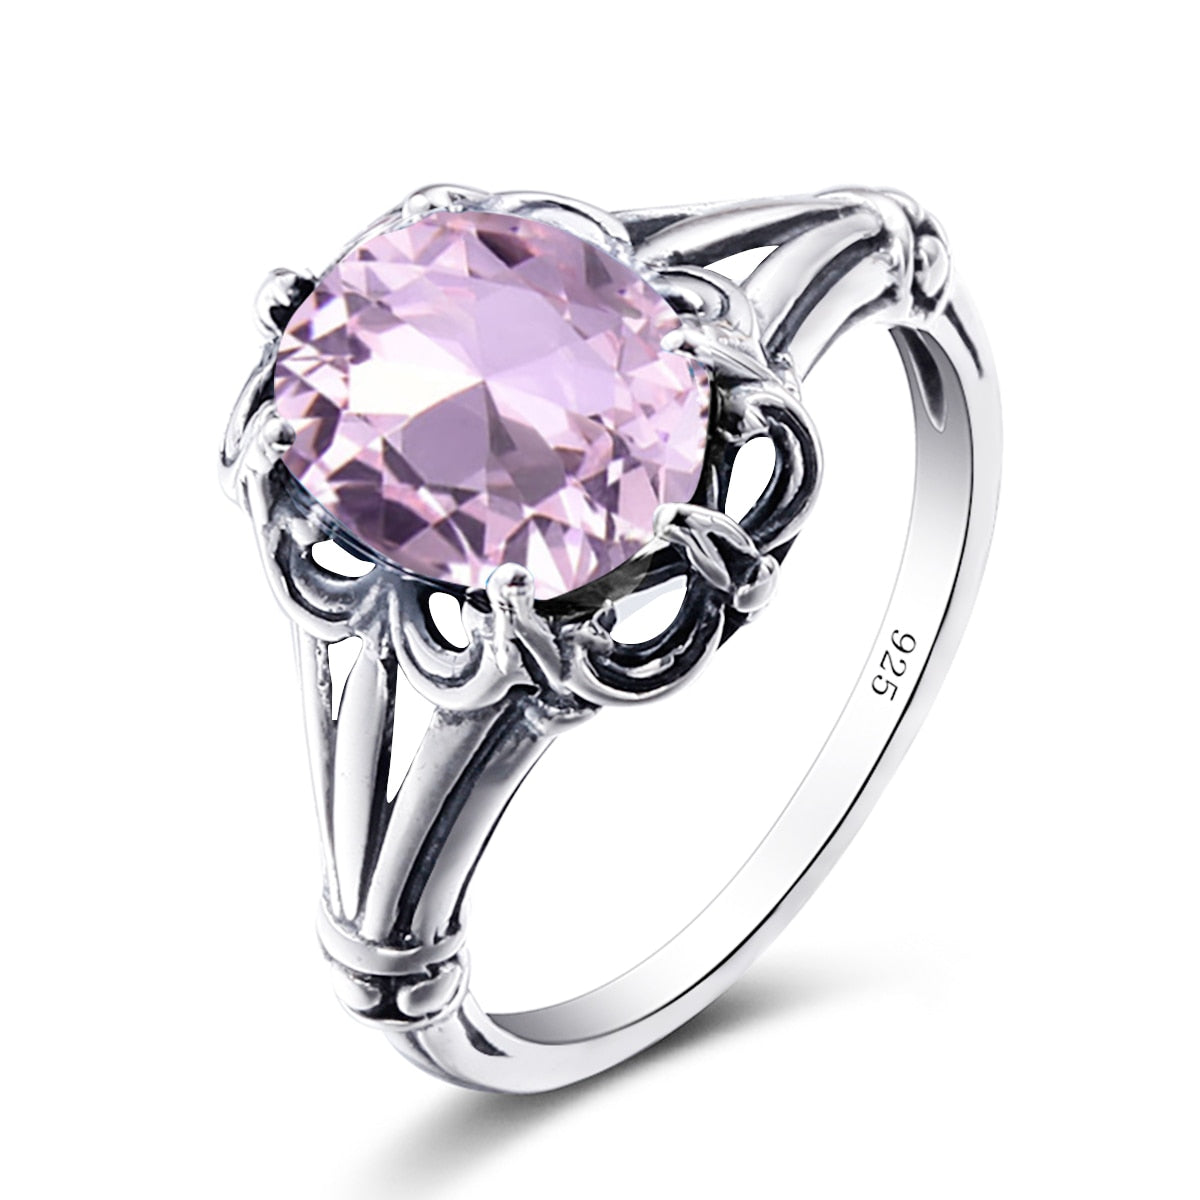 100% 925 Sterling Silver Rings Oval Design Garnet Bohemian Handmade Victoria Wieck Rings For Women Fine Jewelry Pink Stone